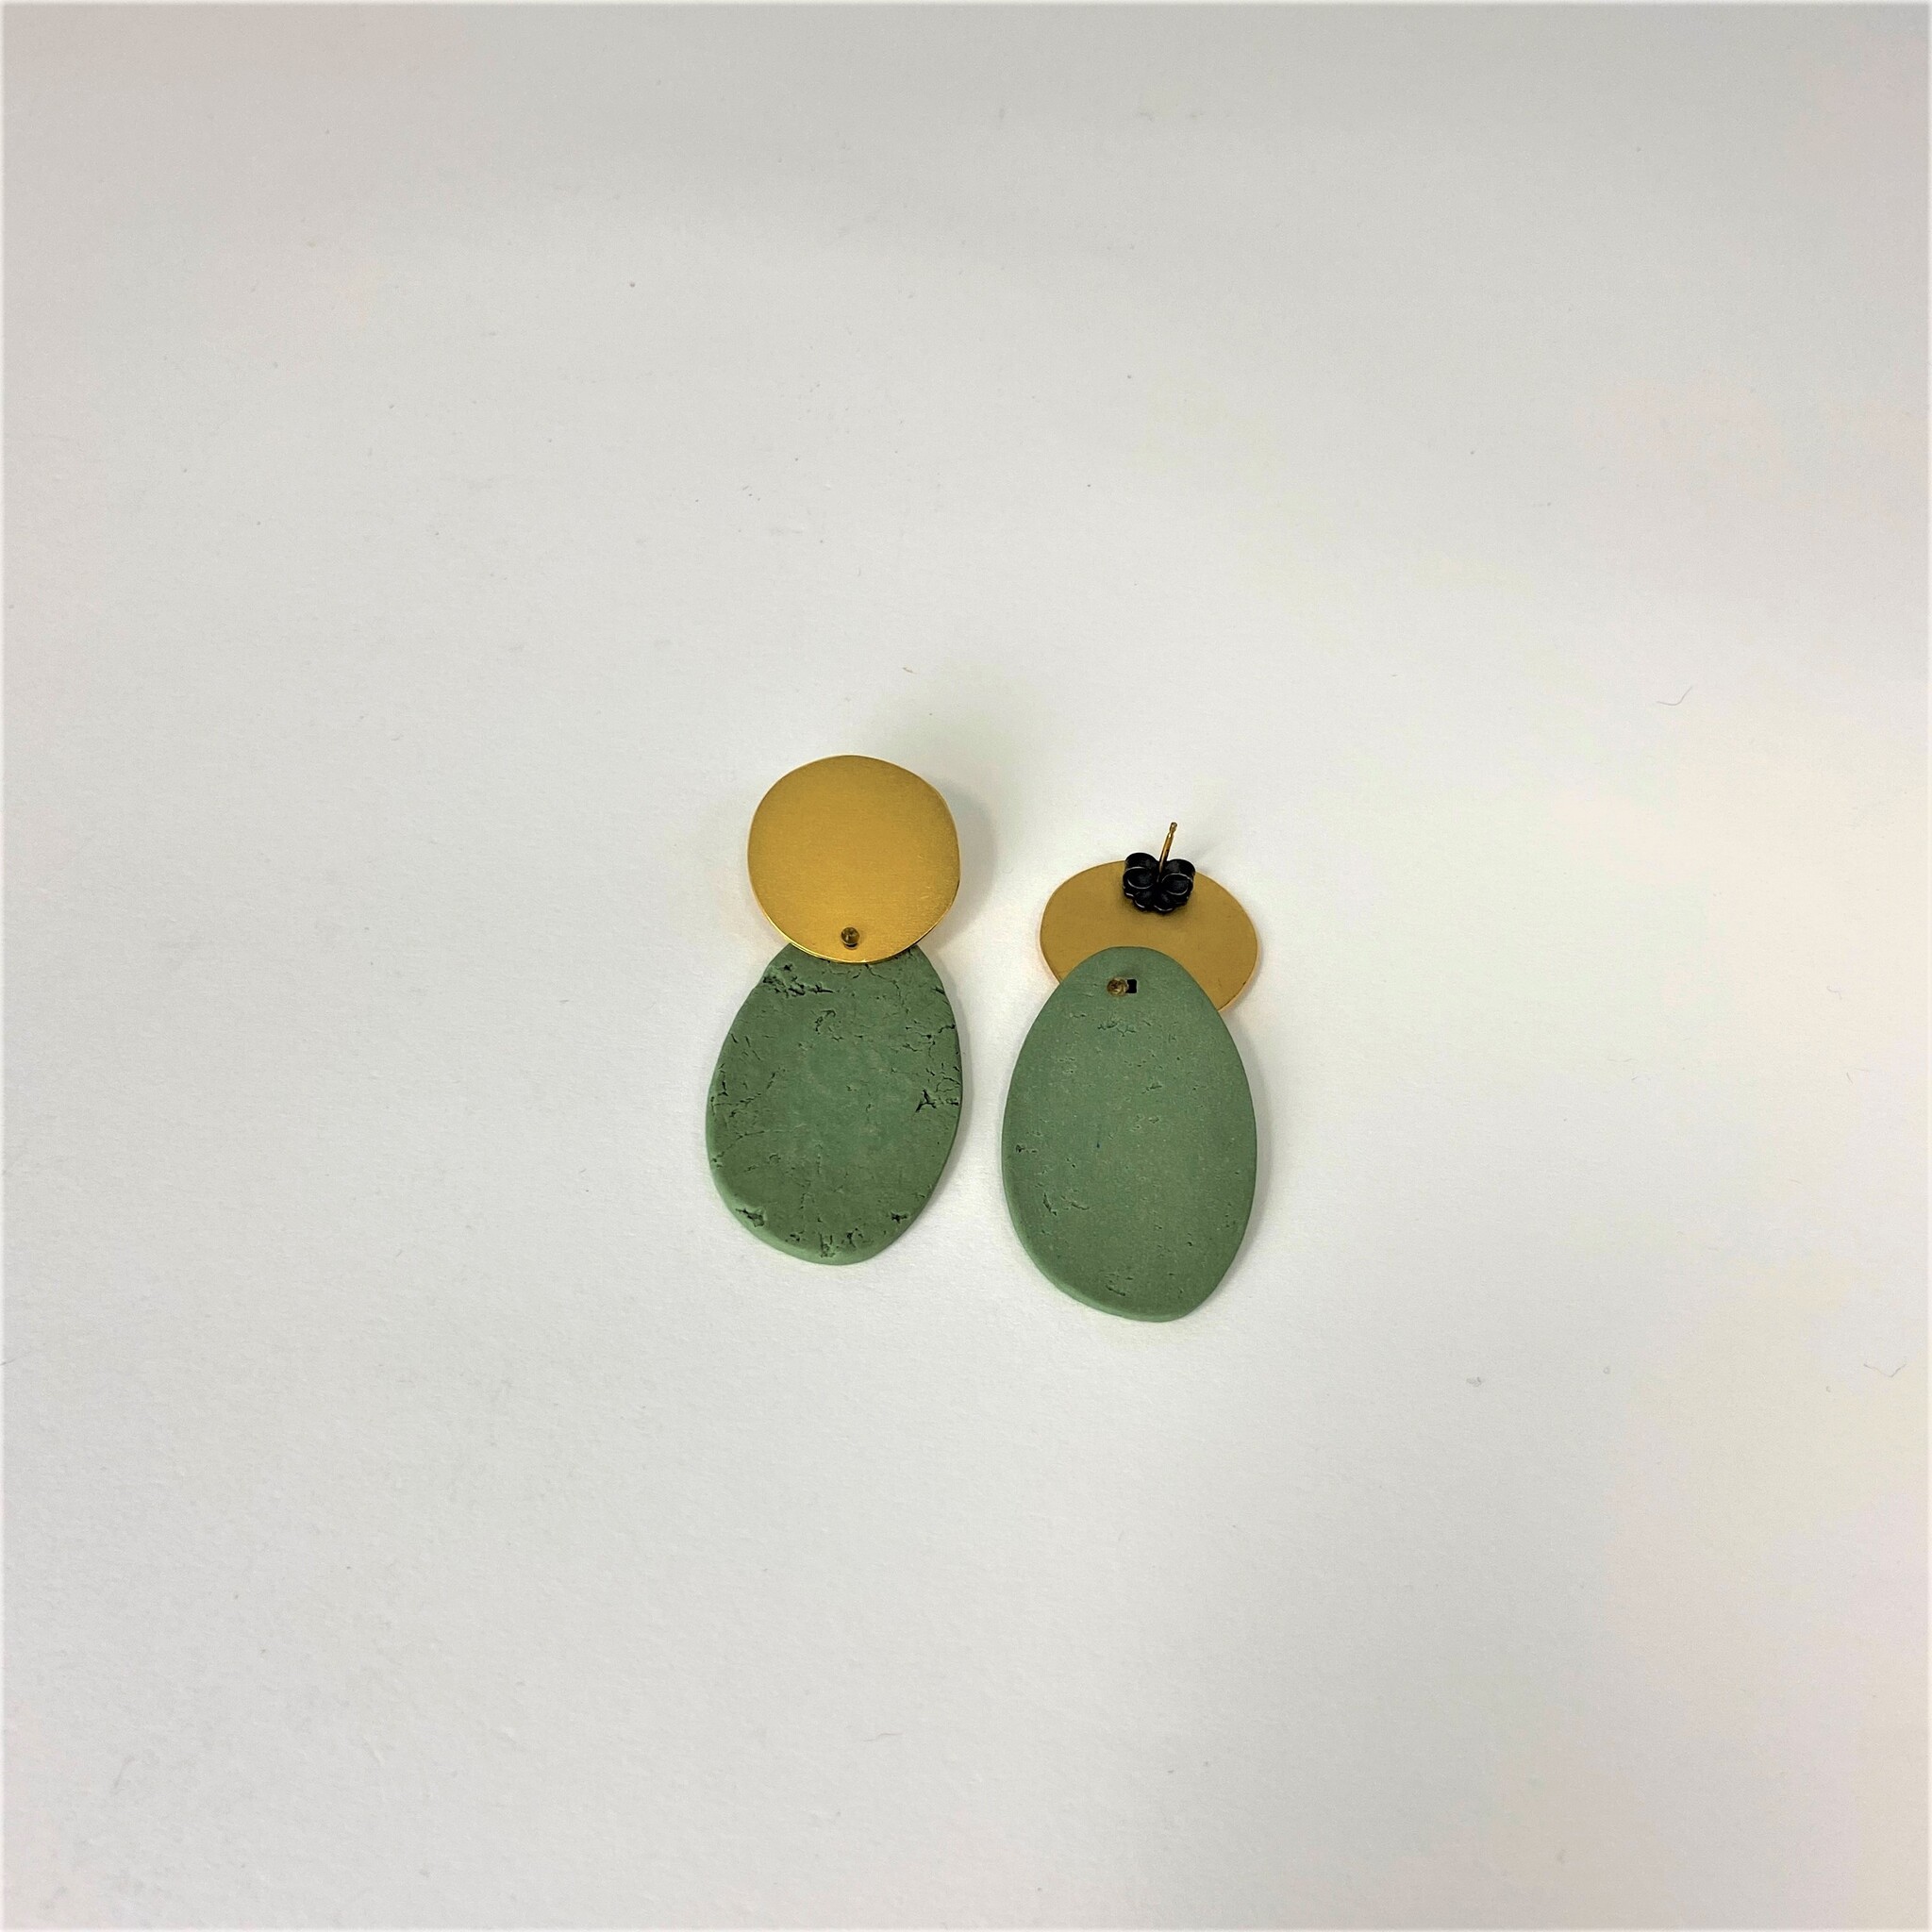 Maia Leppo Green Dangles Earrings